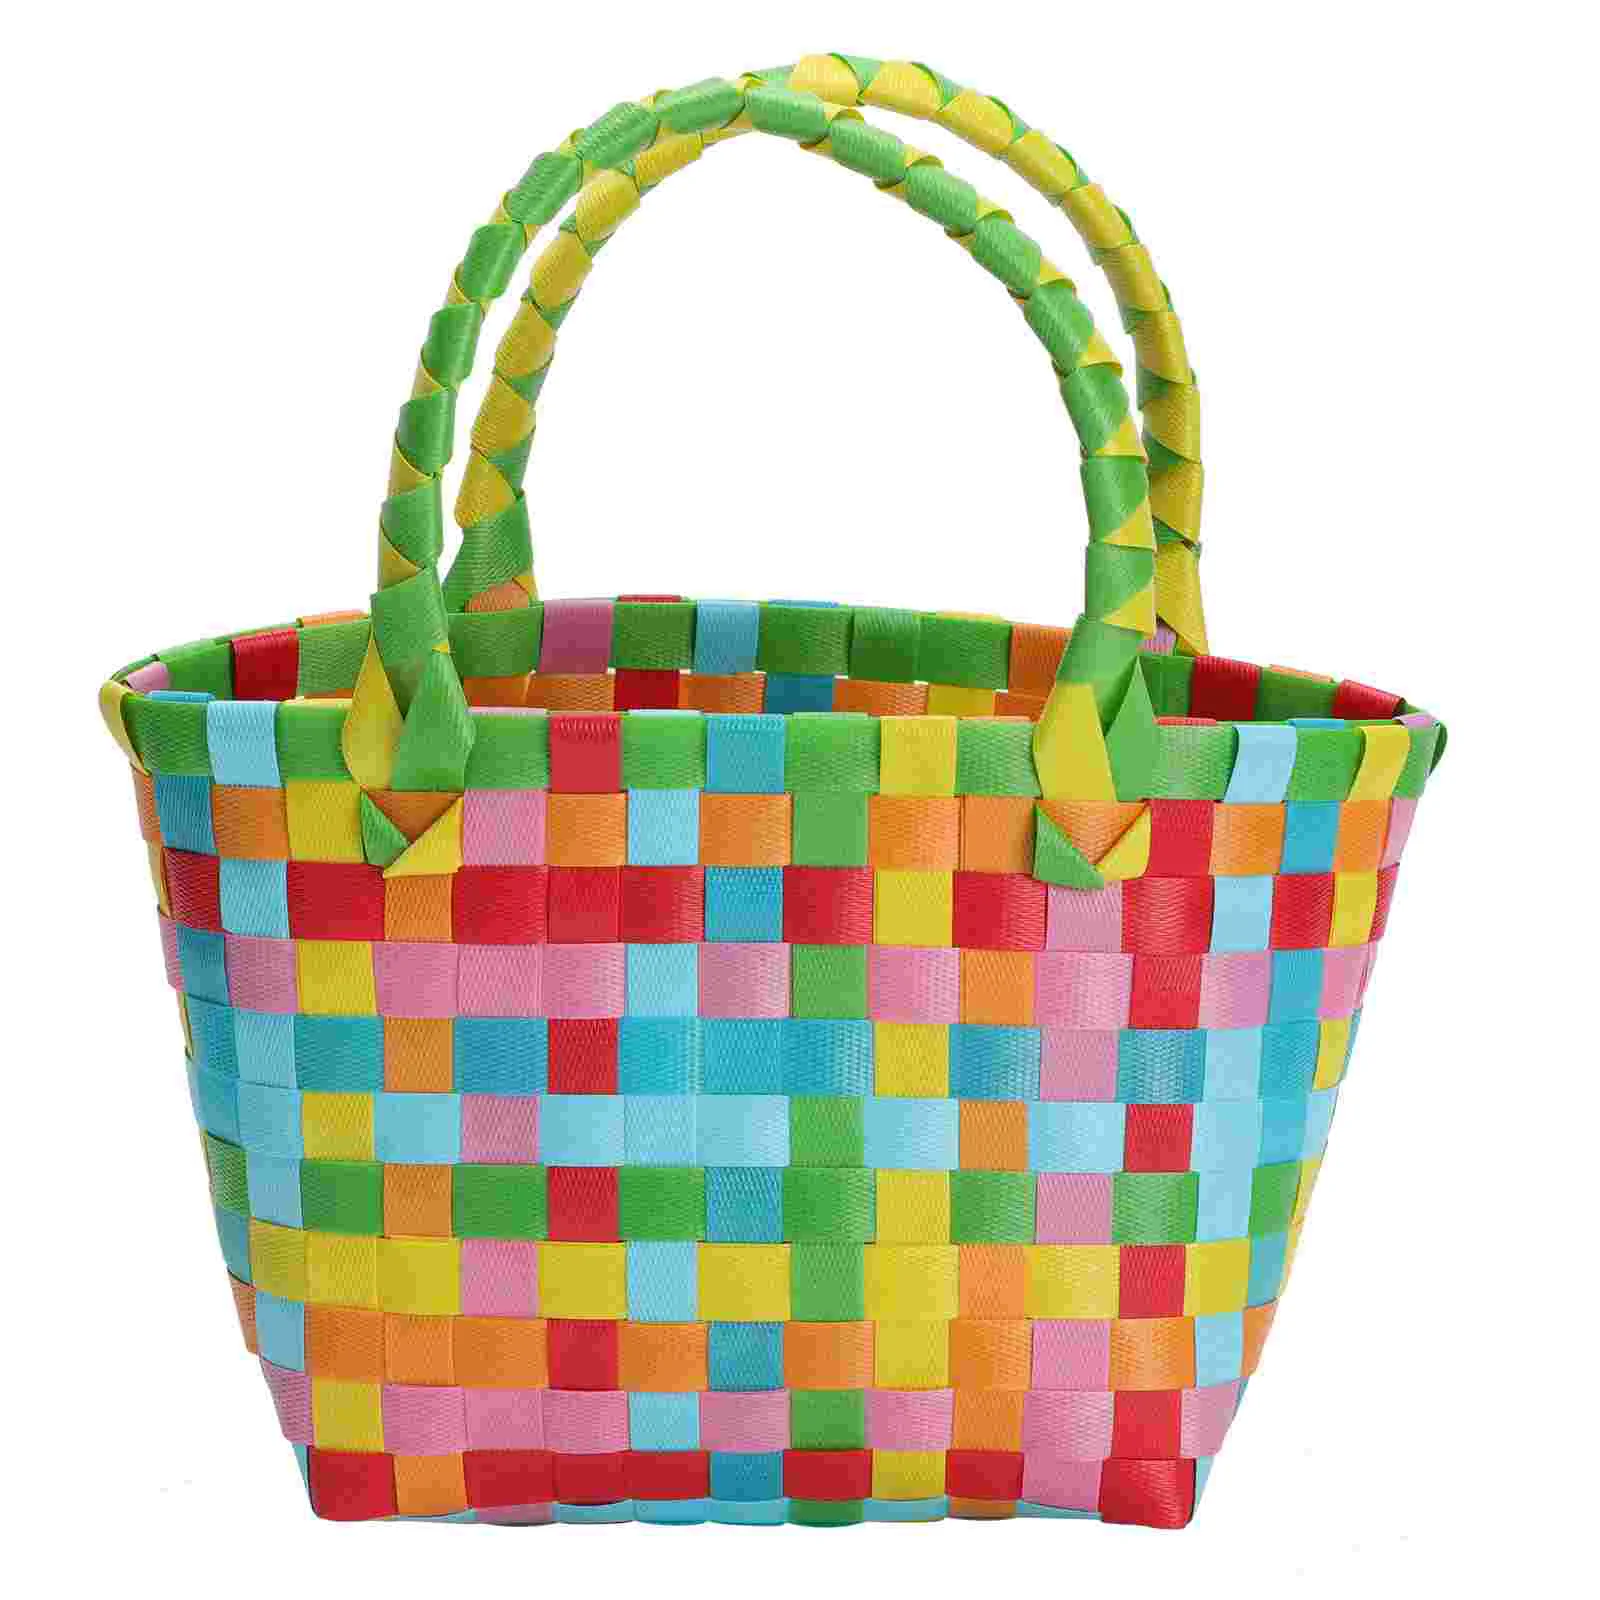 

Basket Bag Wovenshopping Tote Small Beach Shower Gift Bagsmarket Reusable Travel Handlesportable Easter Storage Flower